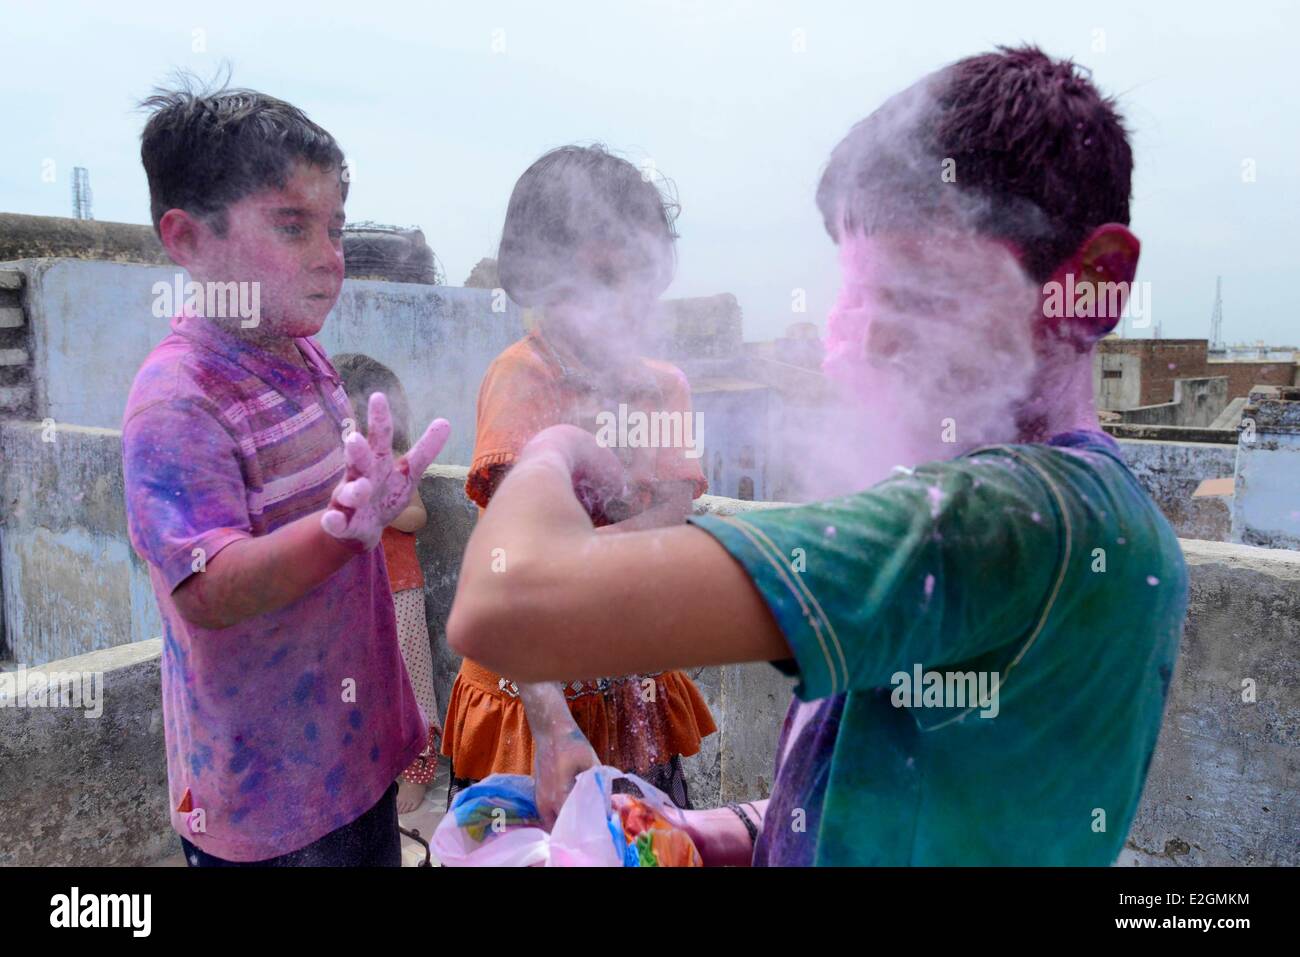 India Uttar Pradesh State Mathura young boys play with coloured powder during Holi festival celebrations Stock Photo